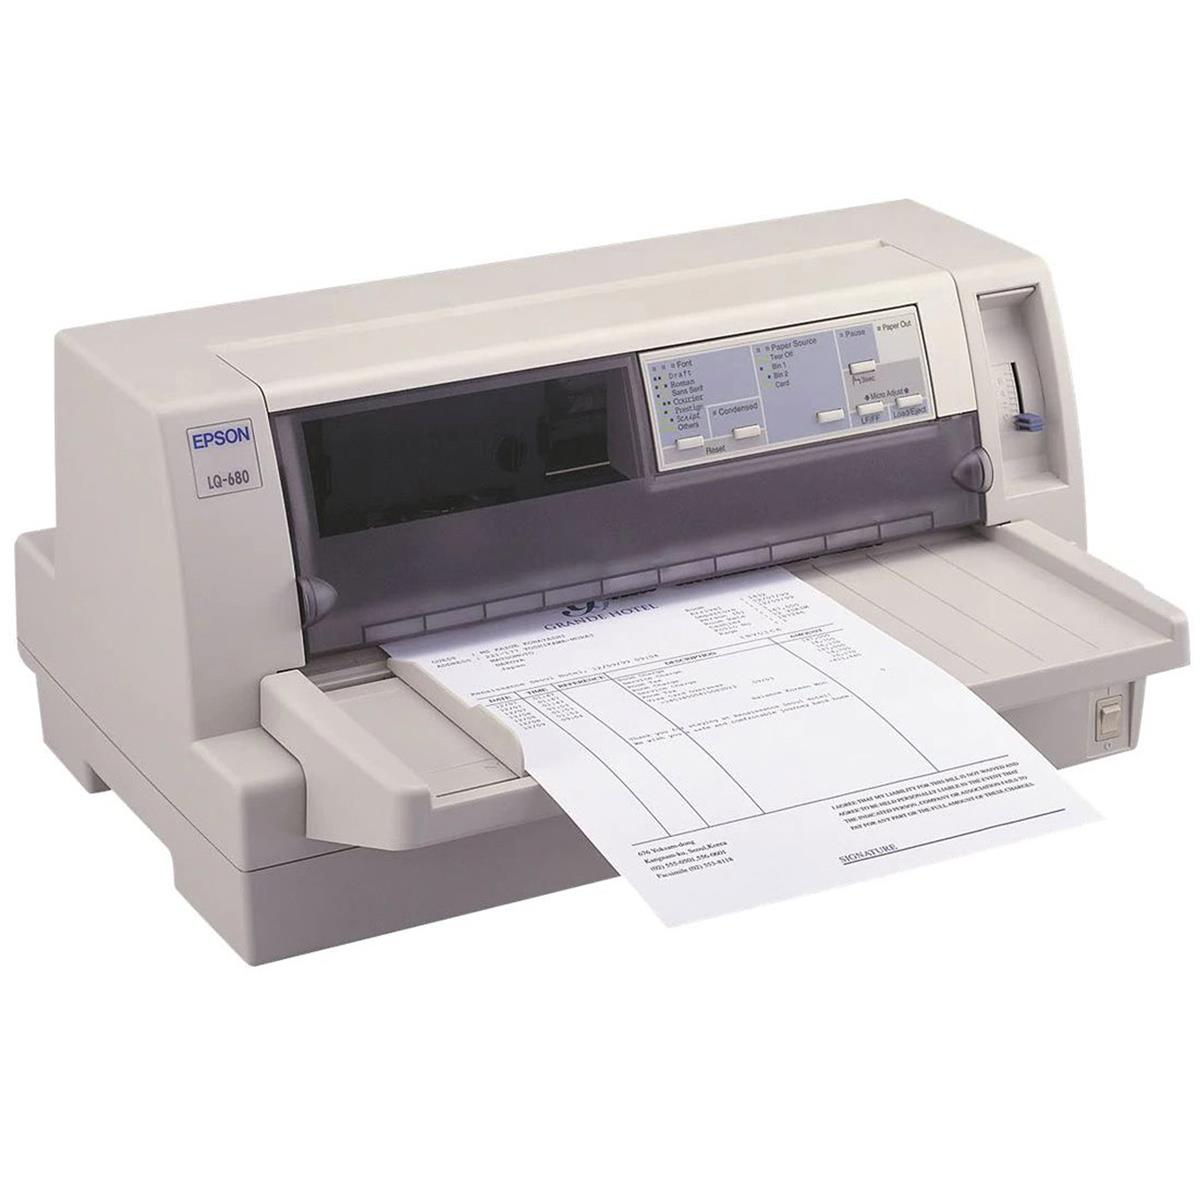 

Epson C376101, LQ-680pro 24-Pin Dot Matrix Printer